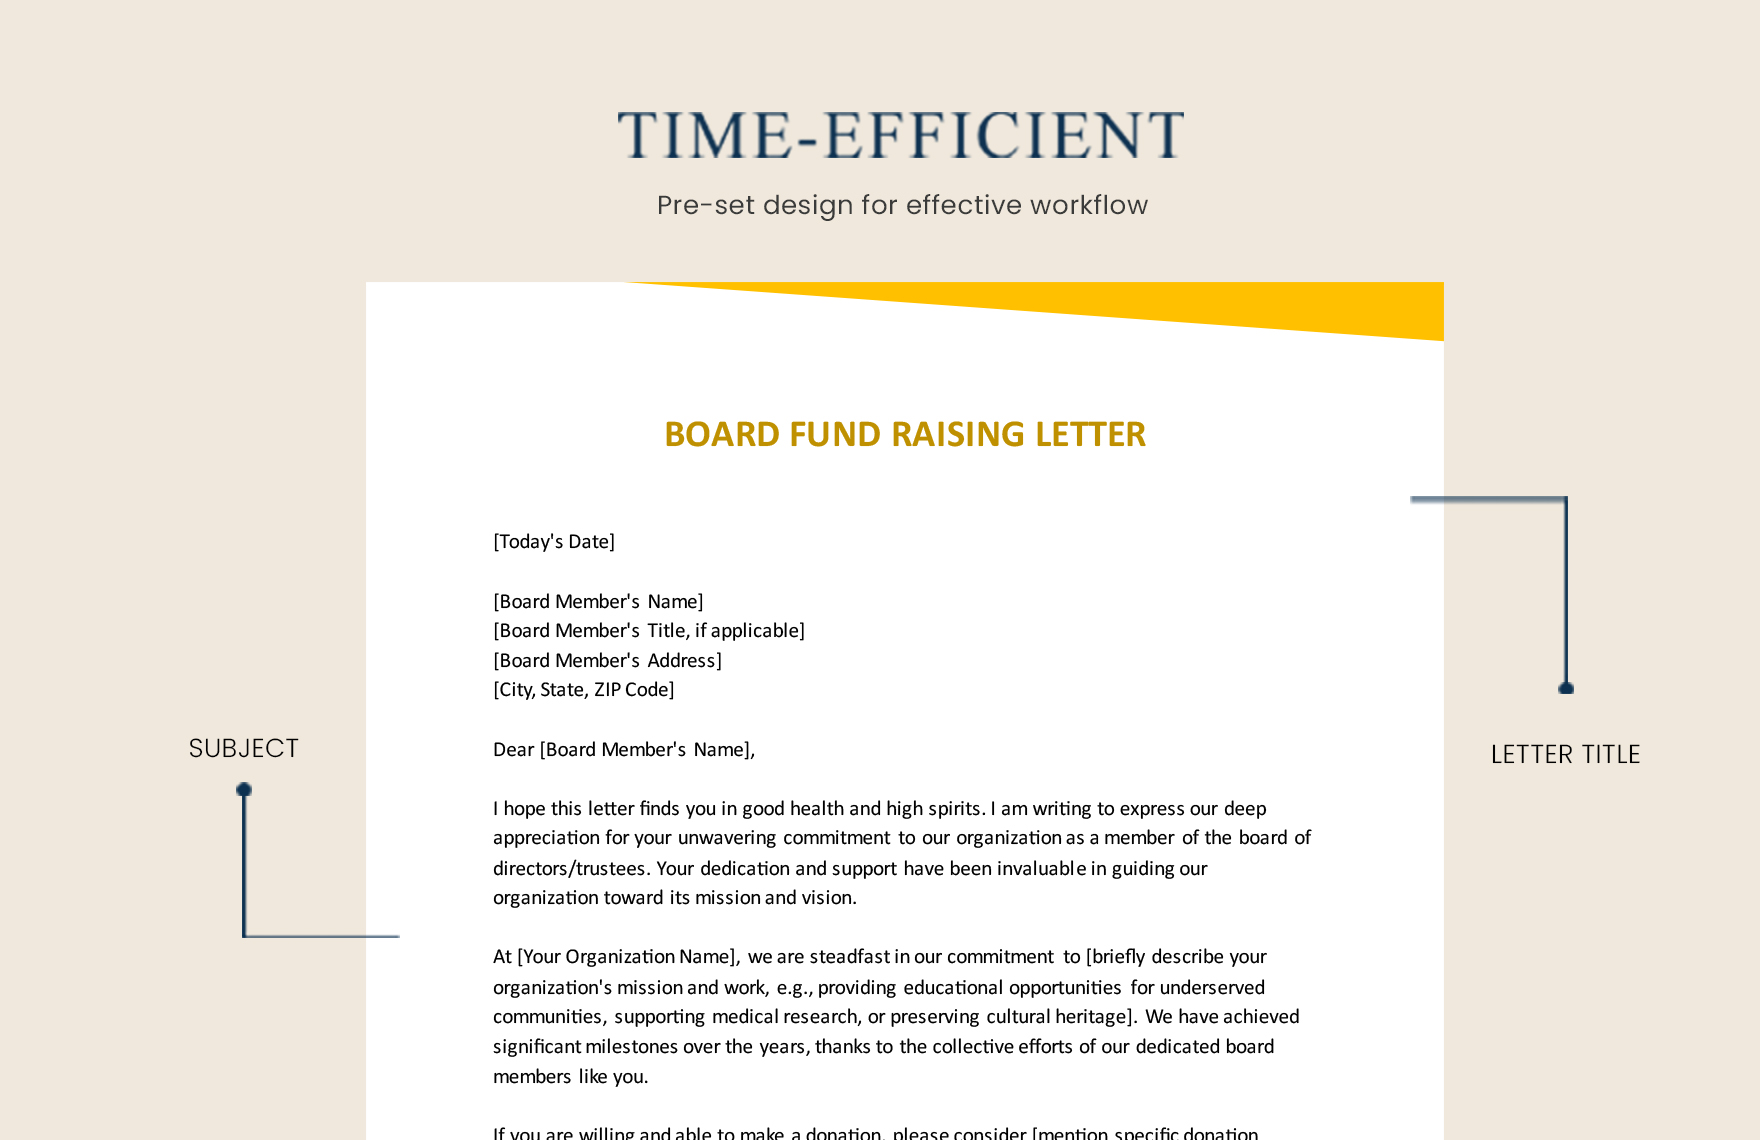 Board Fundraising Letter